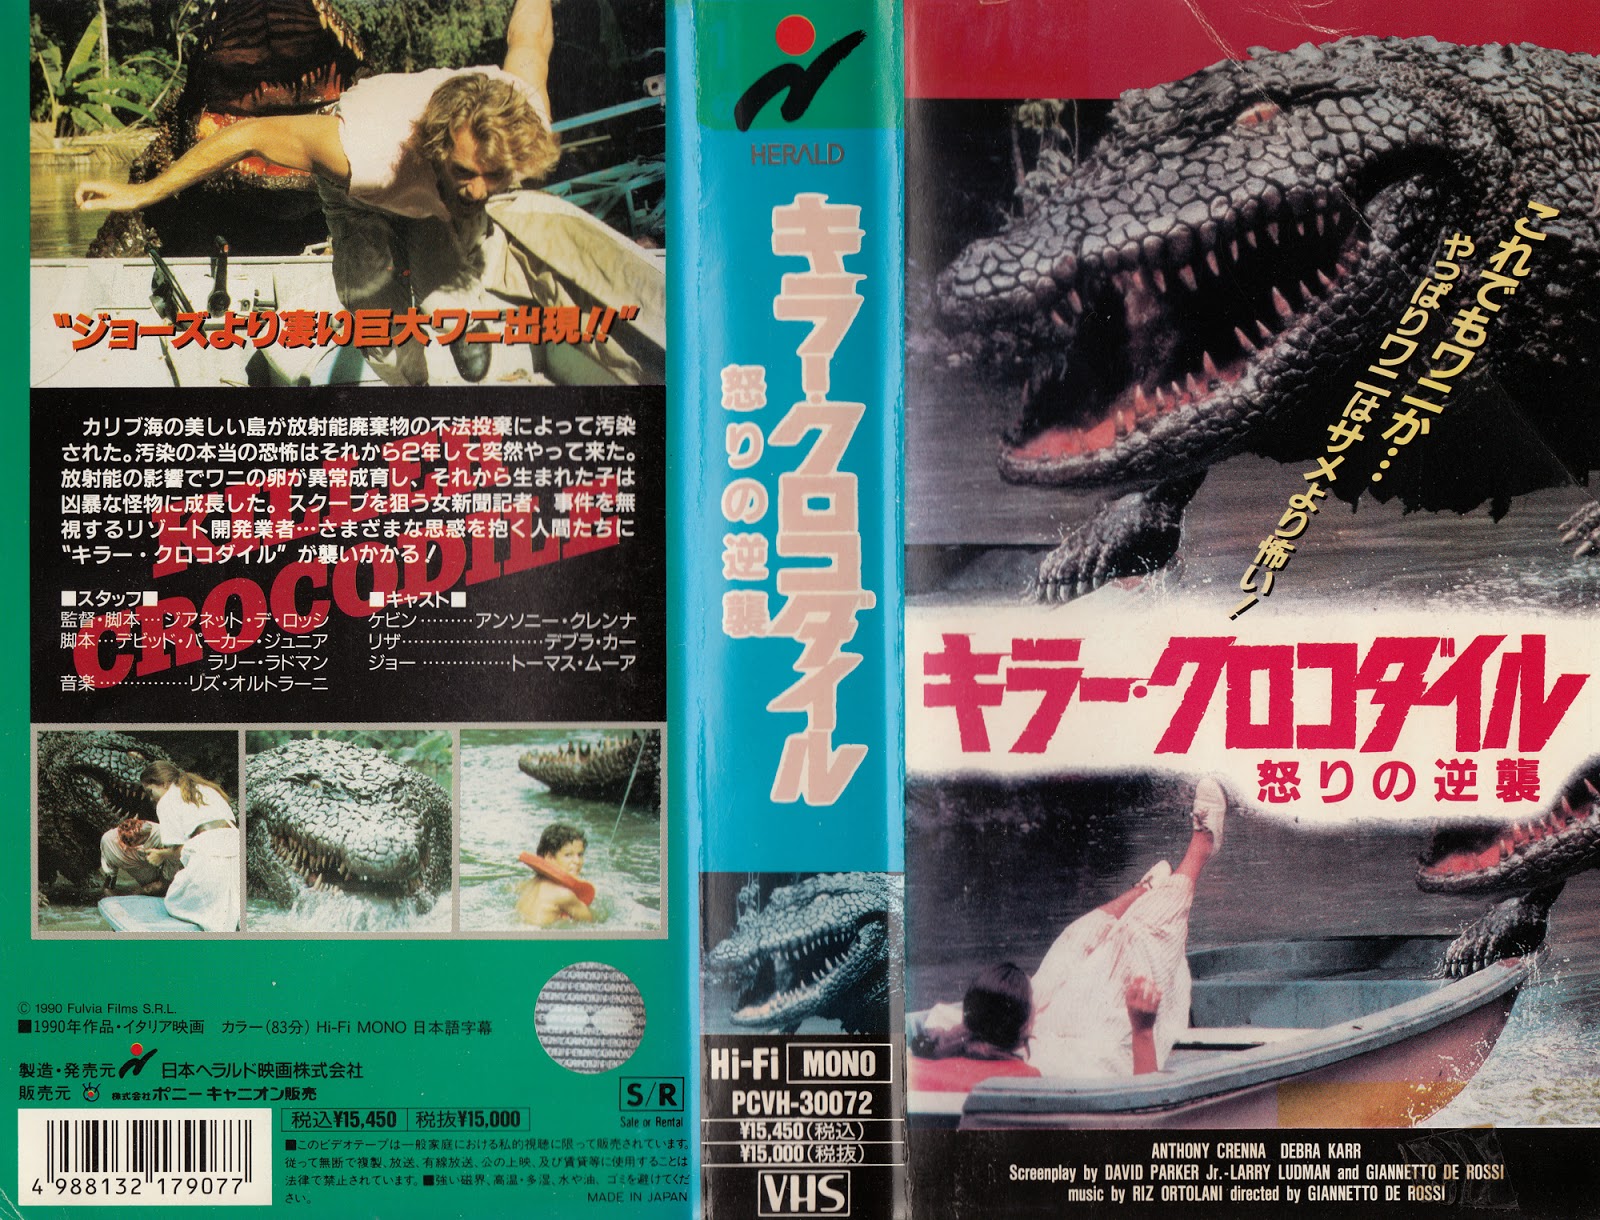 Japanese Vhs Hell Killer Crocodile 2 1990 キラー クロコダイル 怒りの逆襲